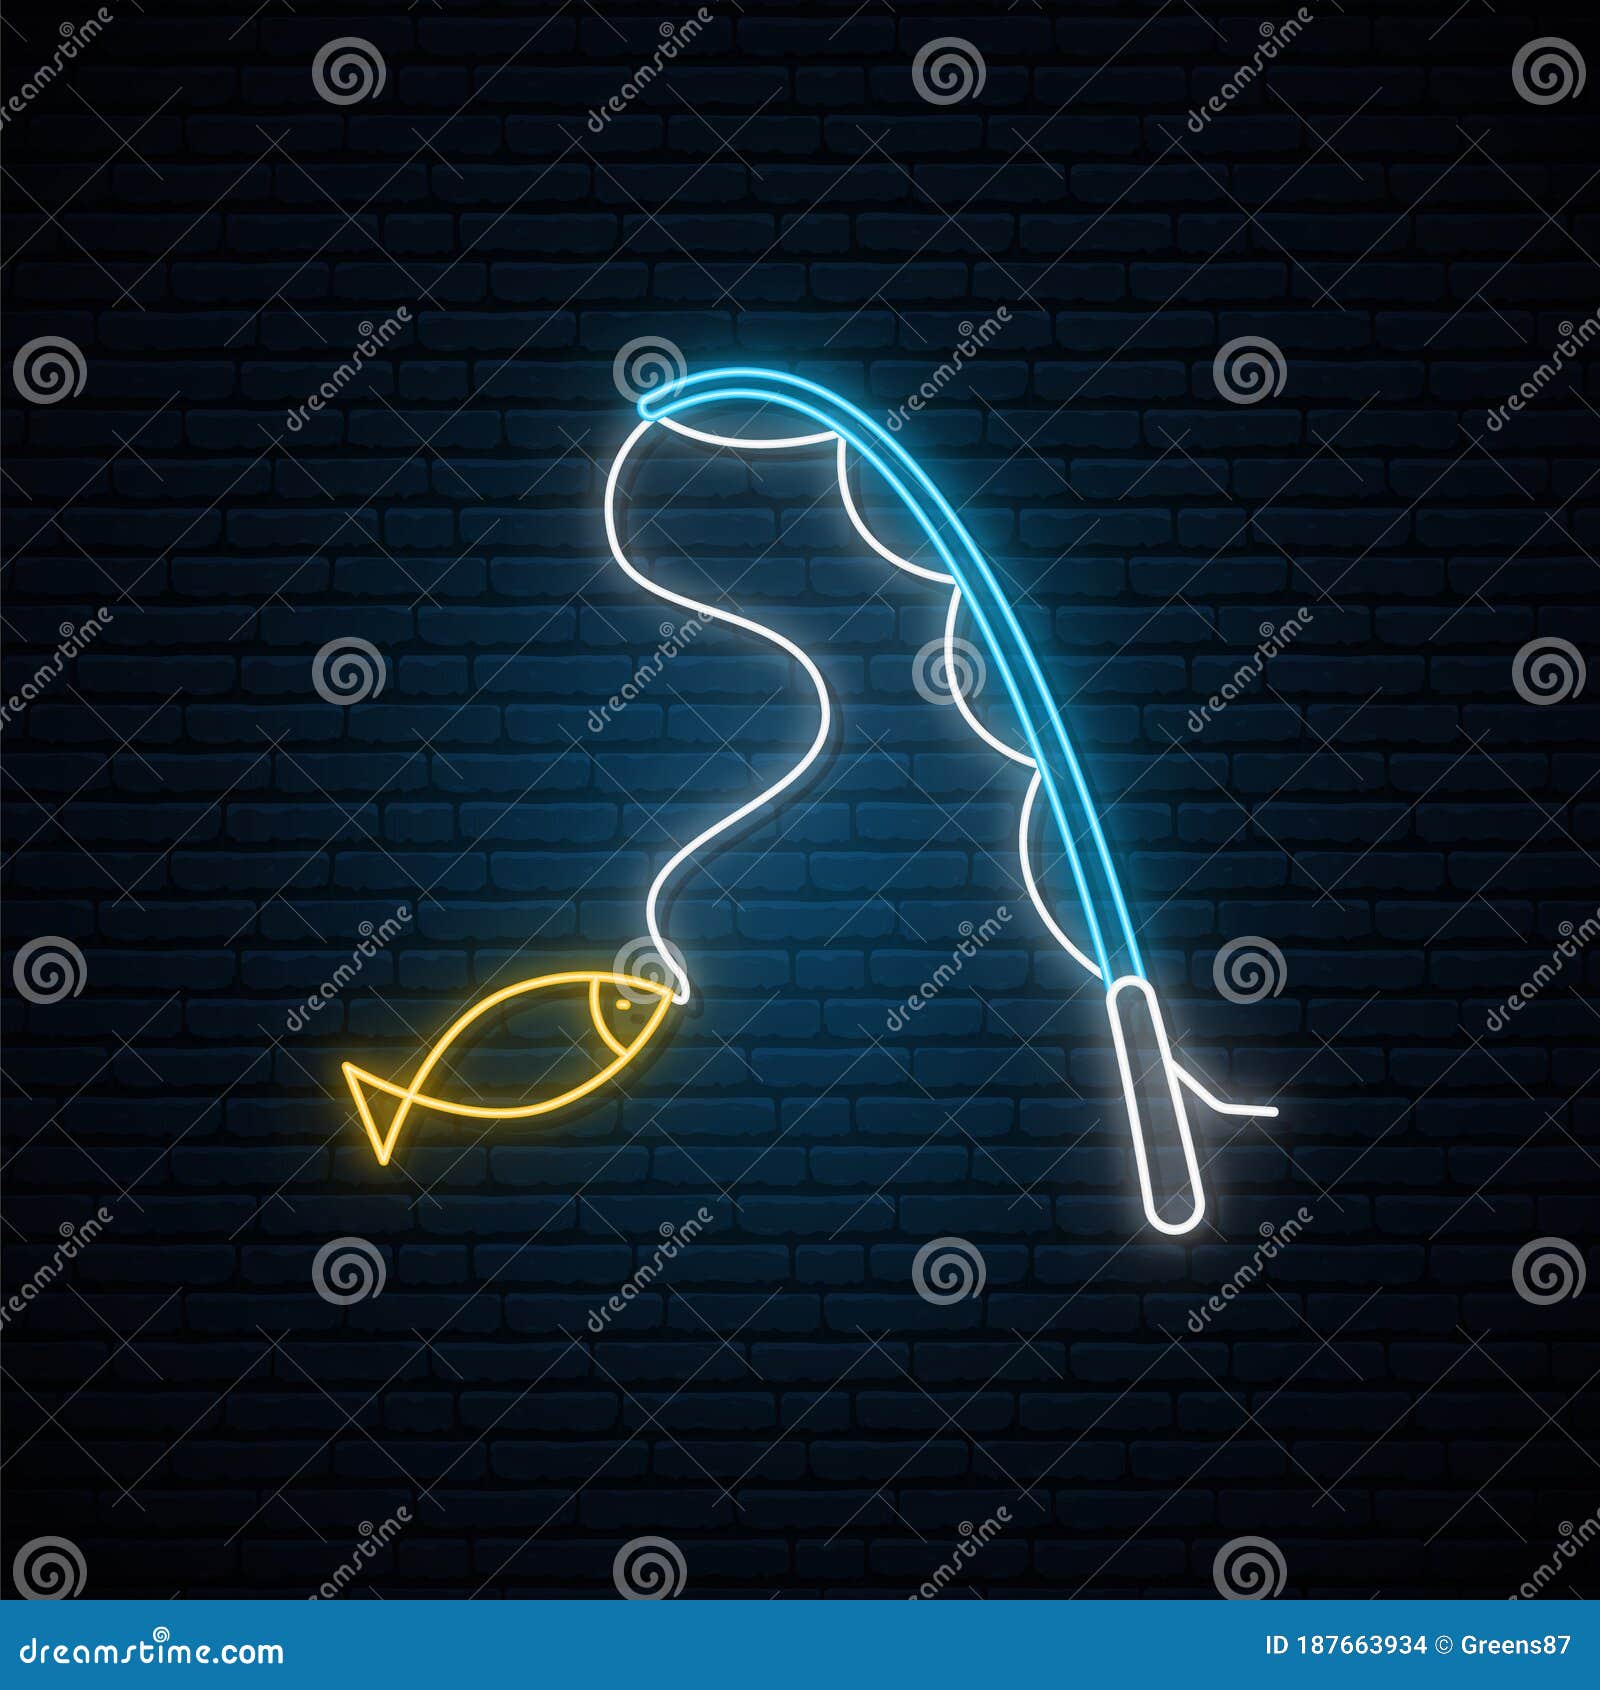 Neon Fishing sign. stock vector. Illustration of fishing - 187663934